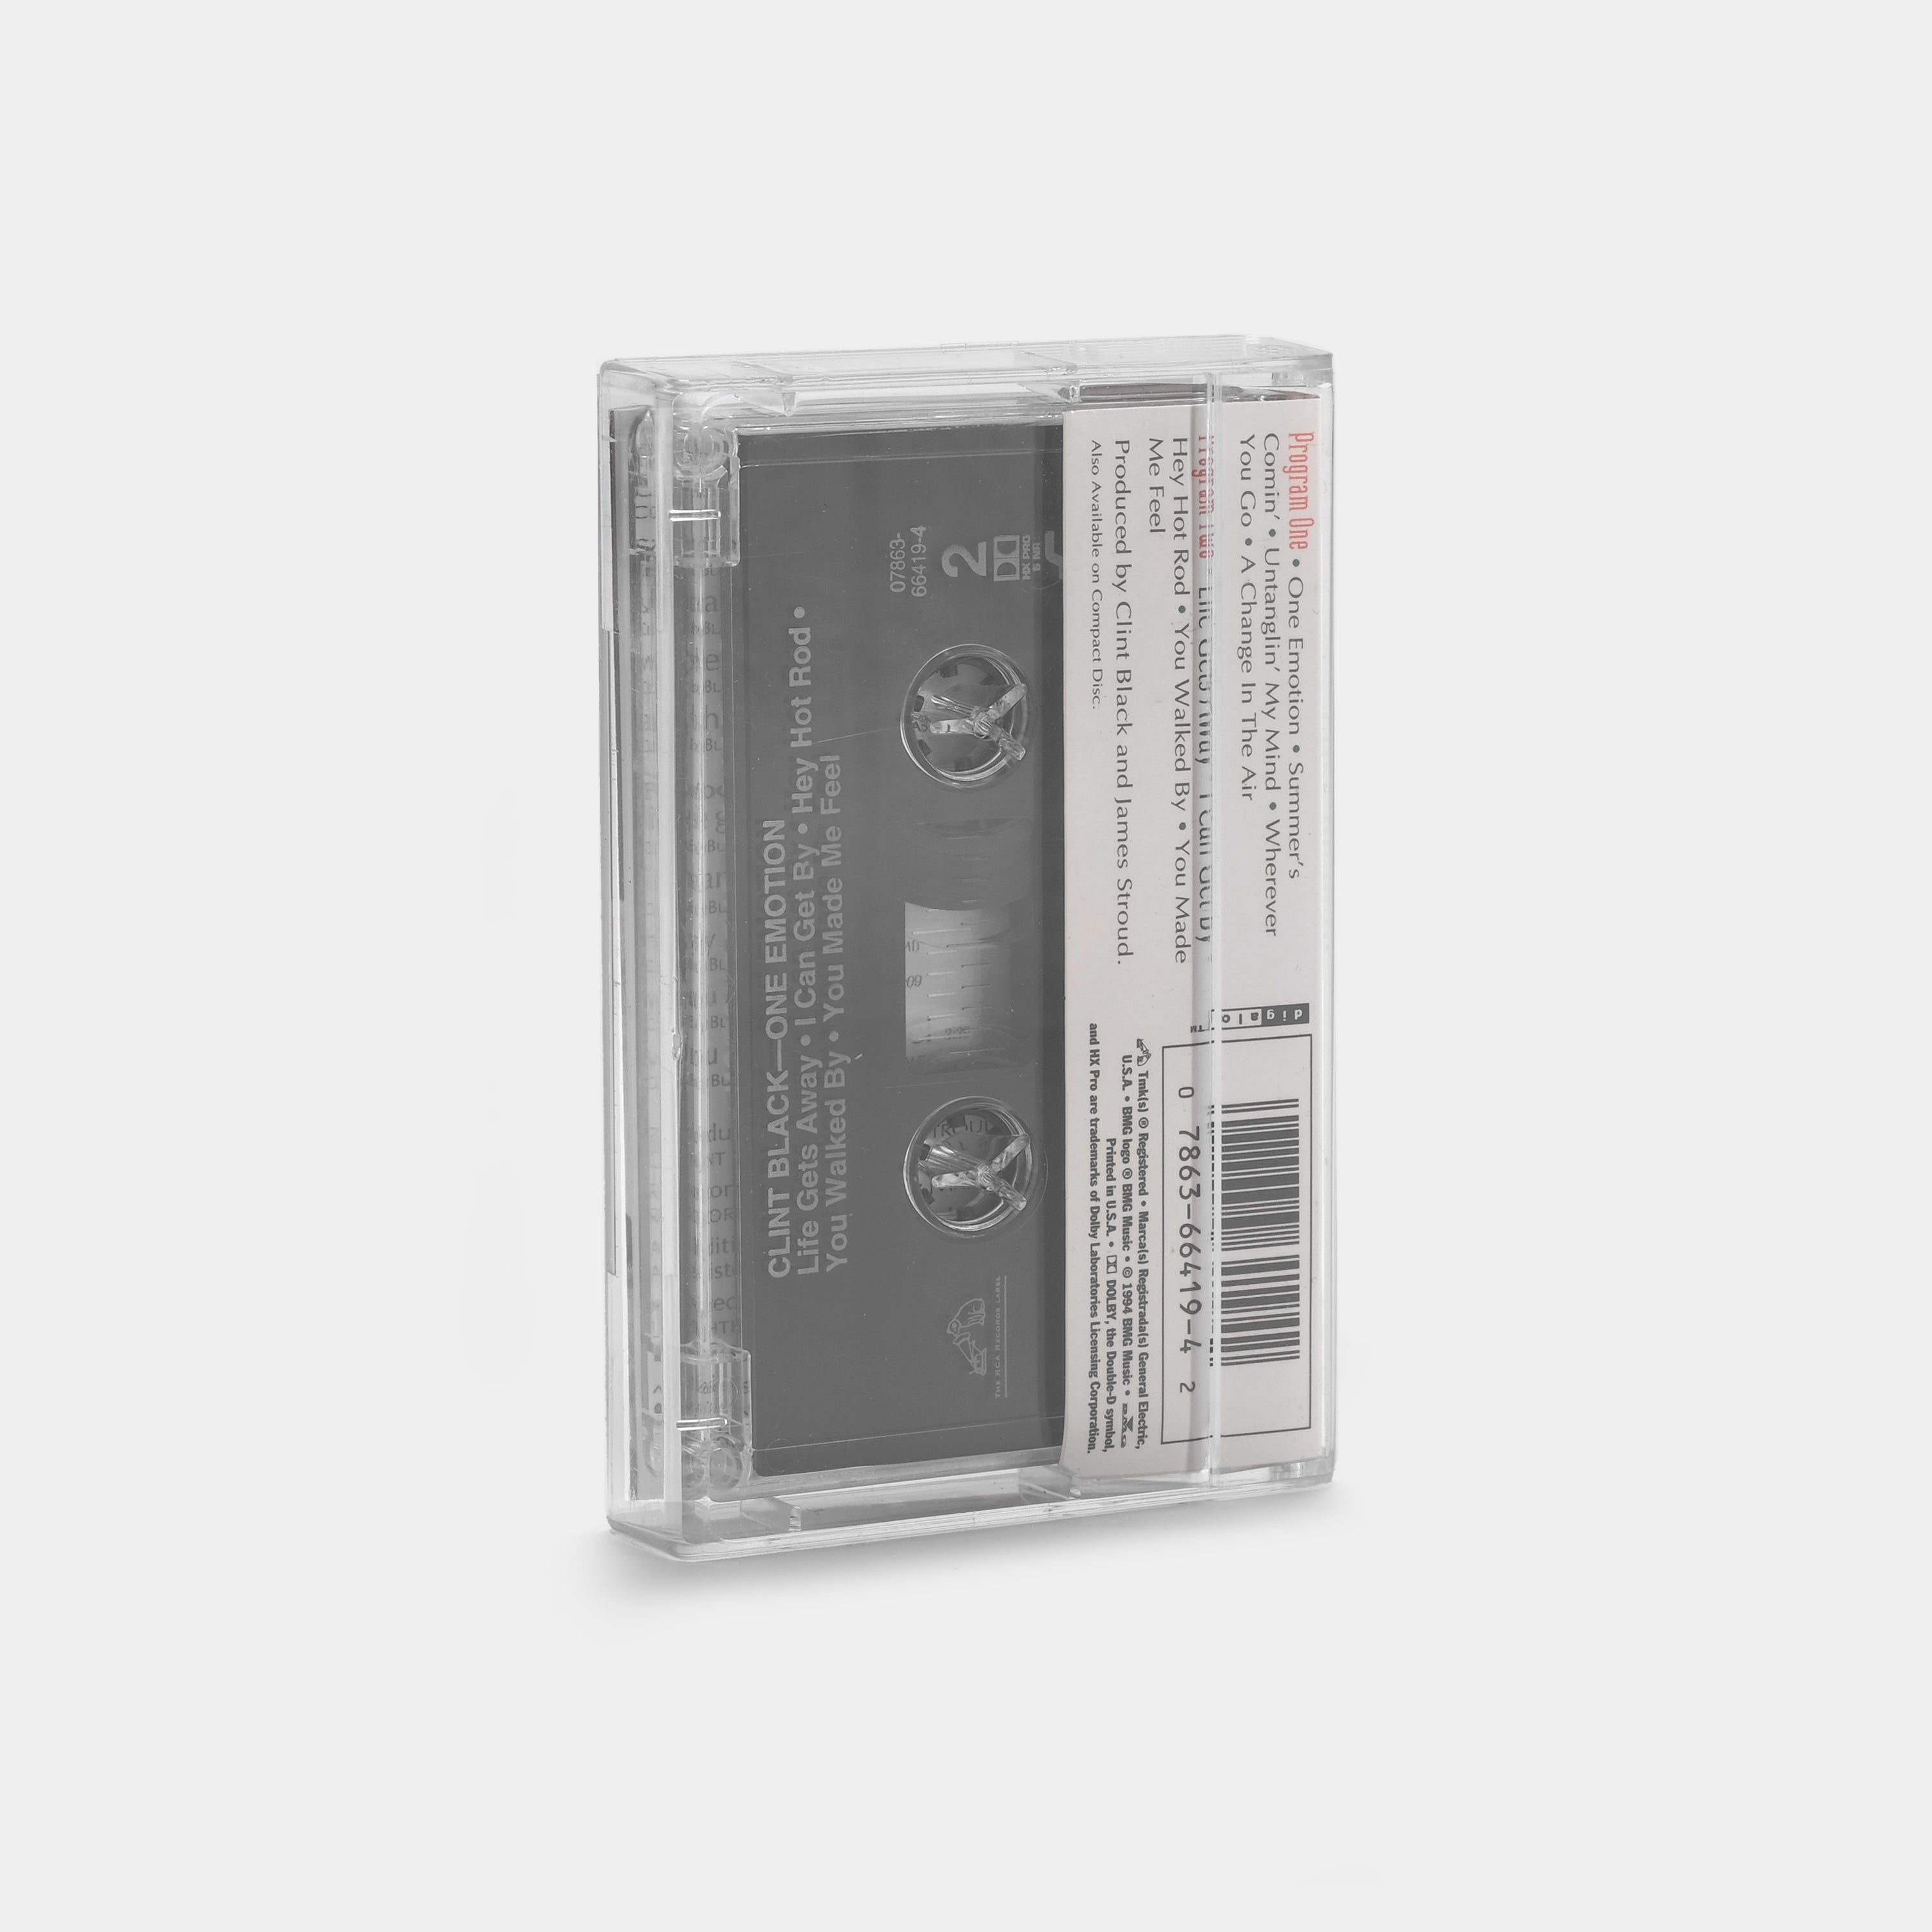 Clint Black - One Emotion Cassette Tape